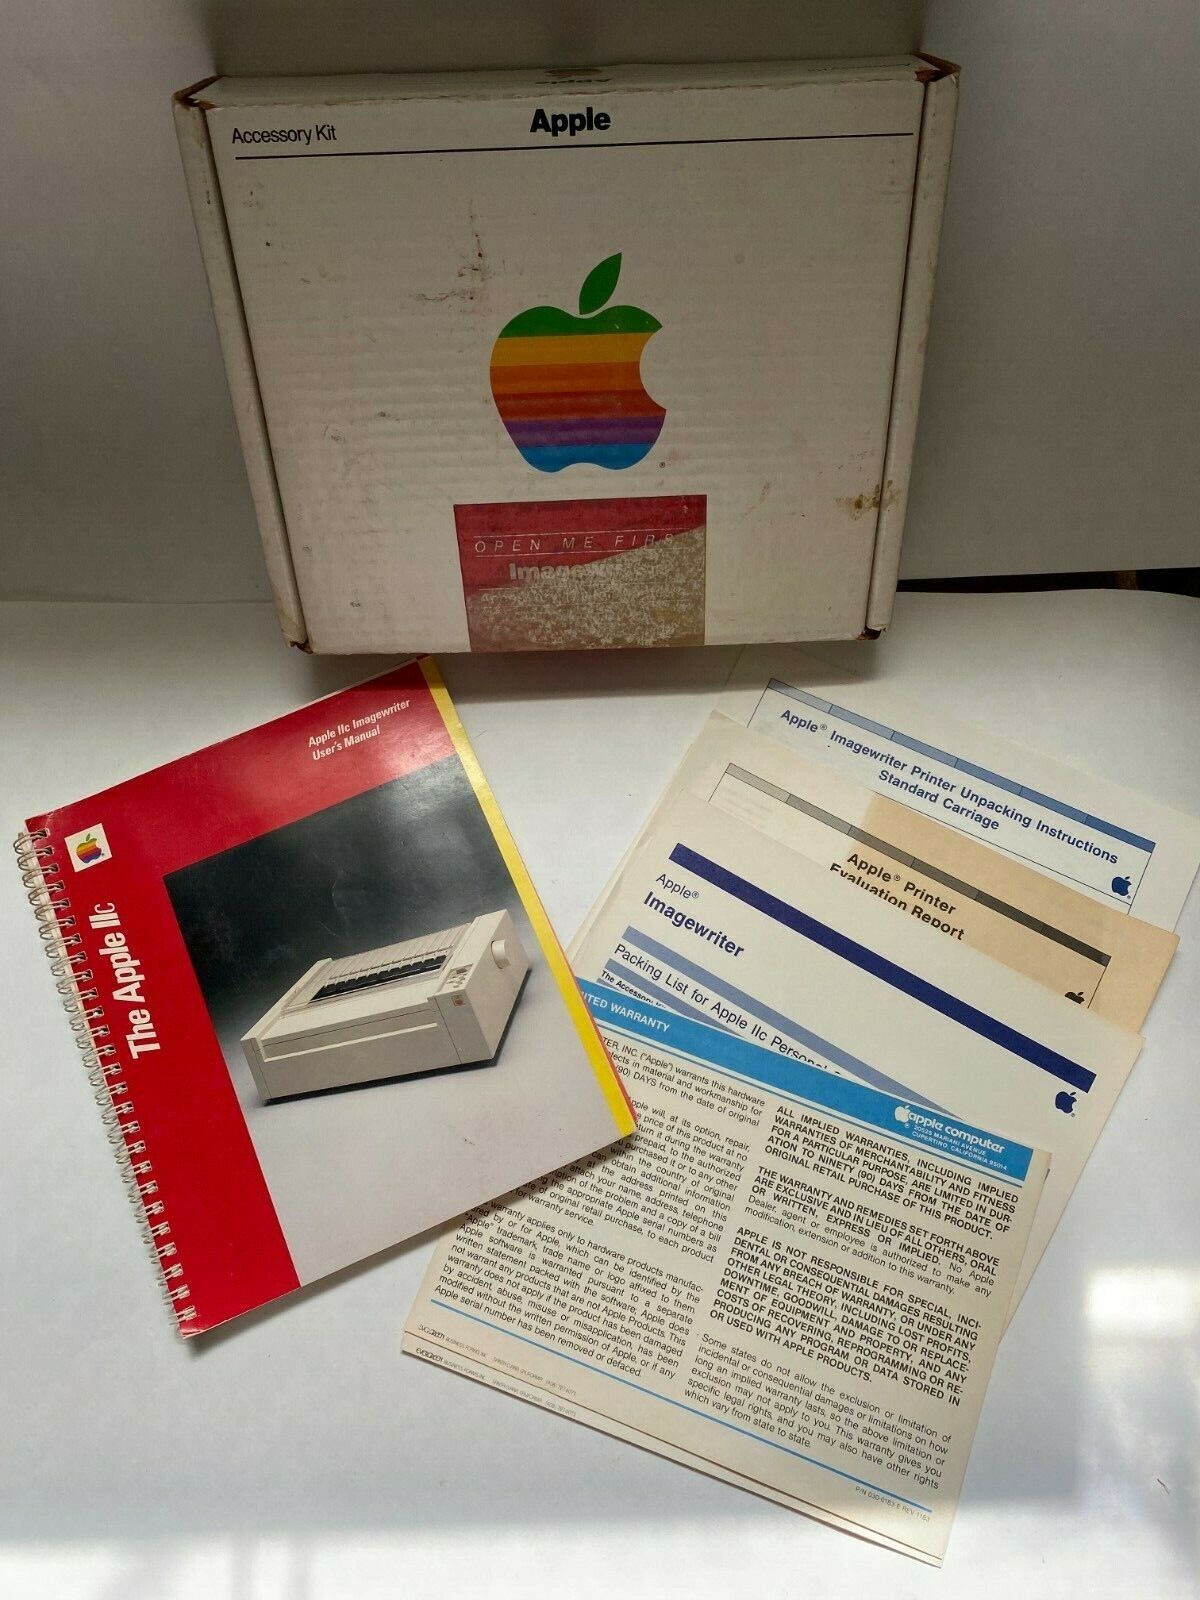 Vtg 1984 Apple II Imagewriter Printer Accessory Kit Manuals Papers Original Box